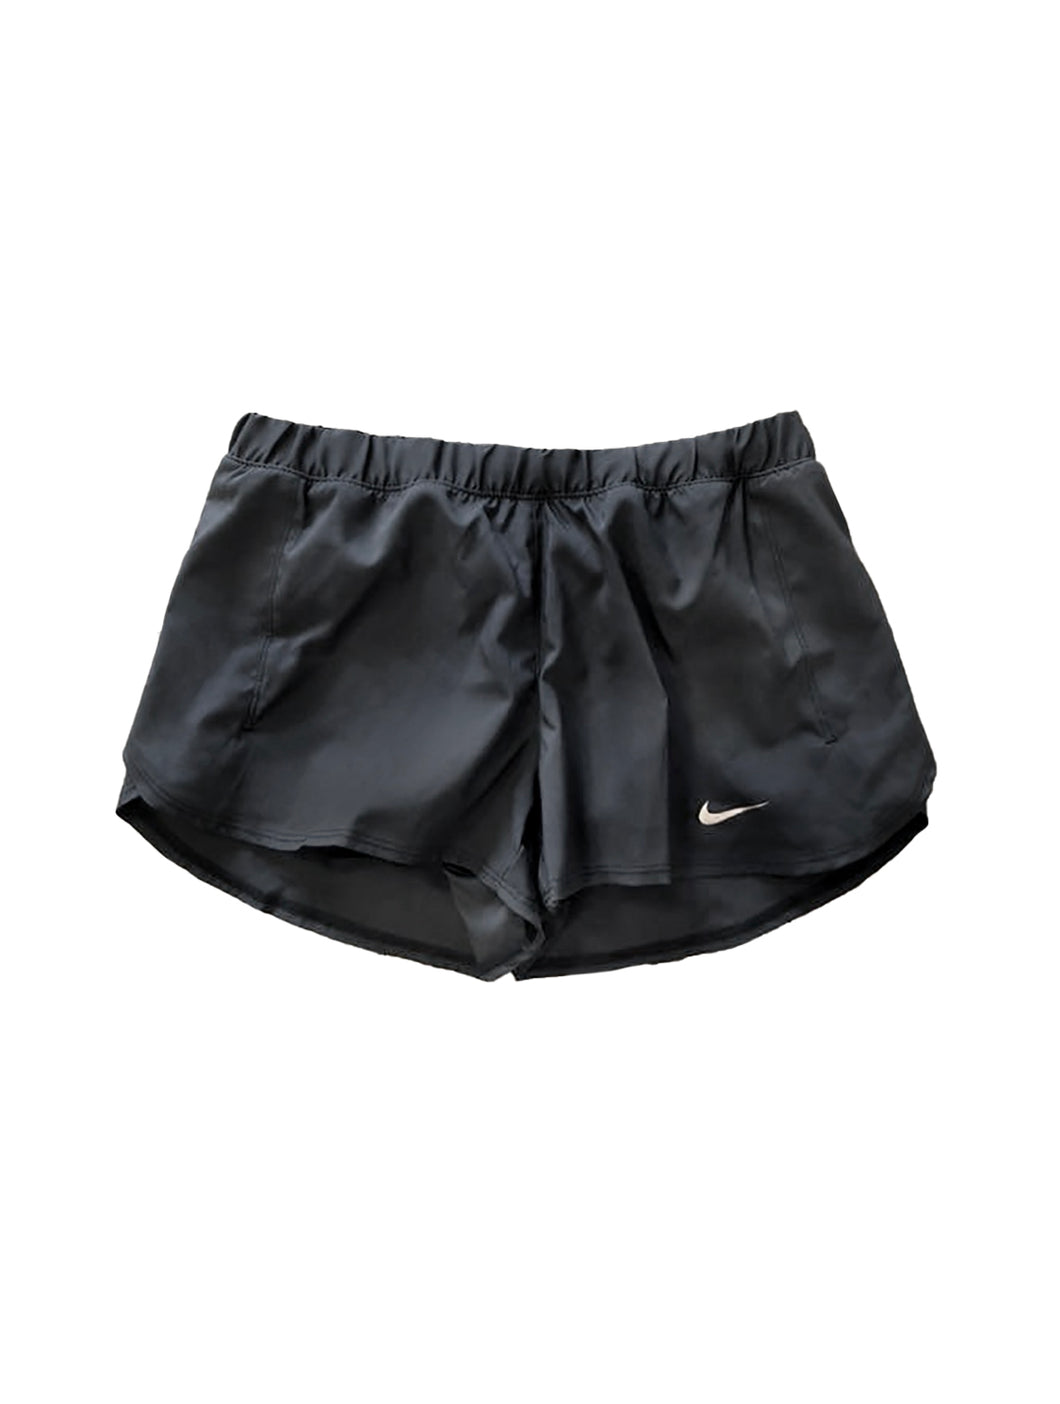 Nike Black Track Shorts